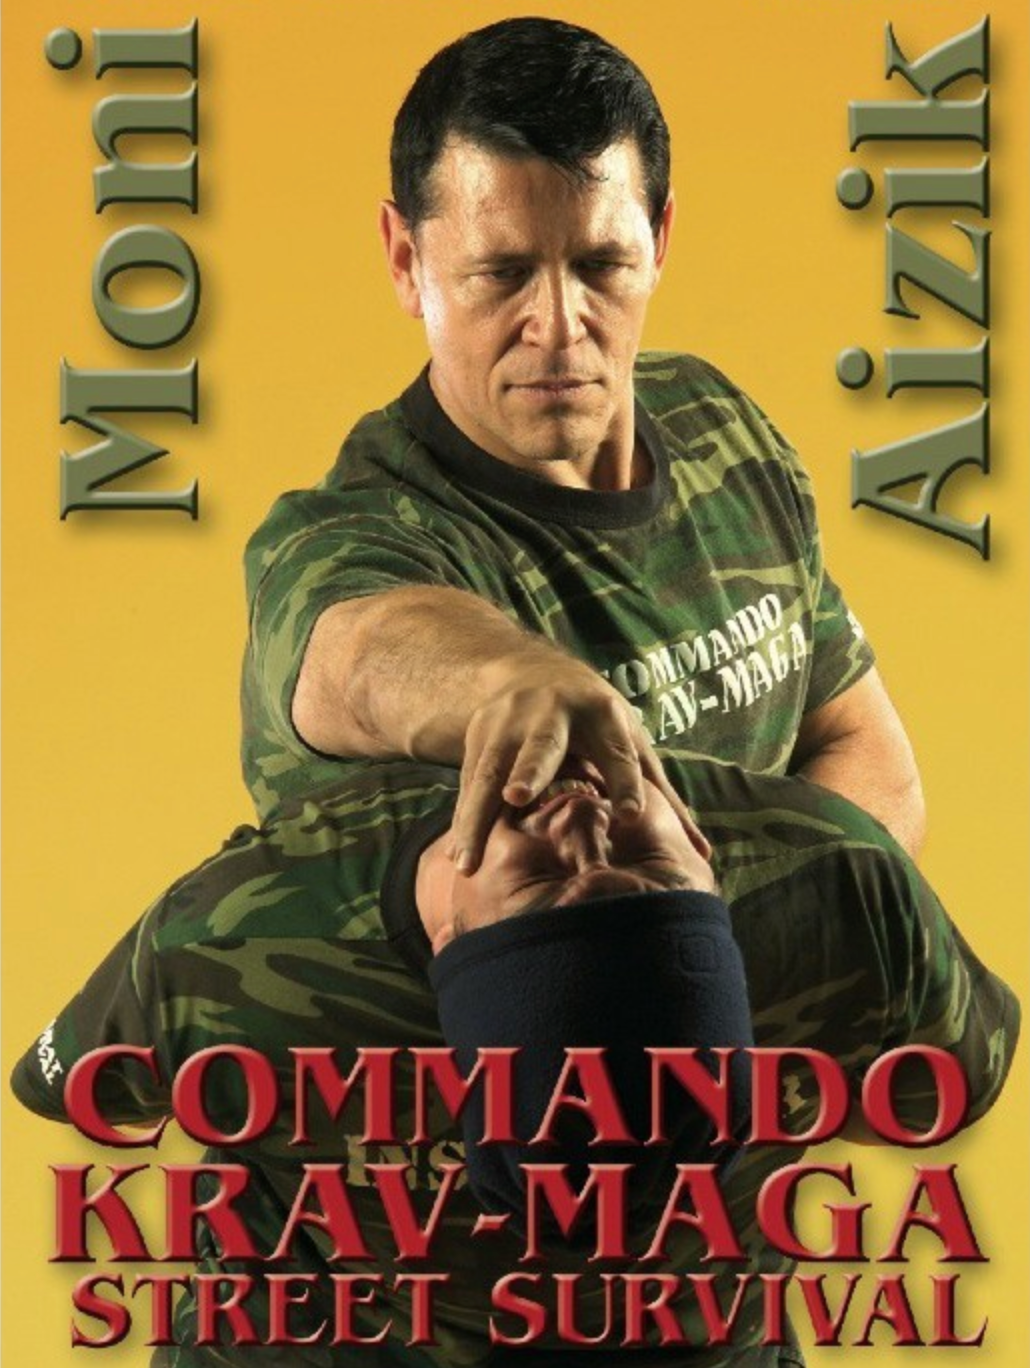 Commando Krav Maga Street Survival DVD by Moni Aizik - Budovideos Inc